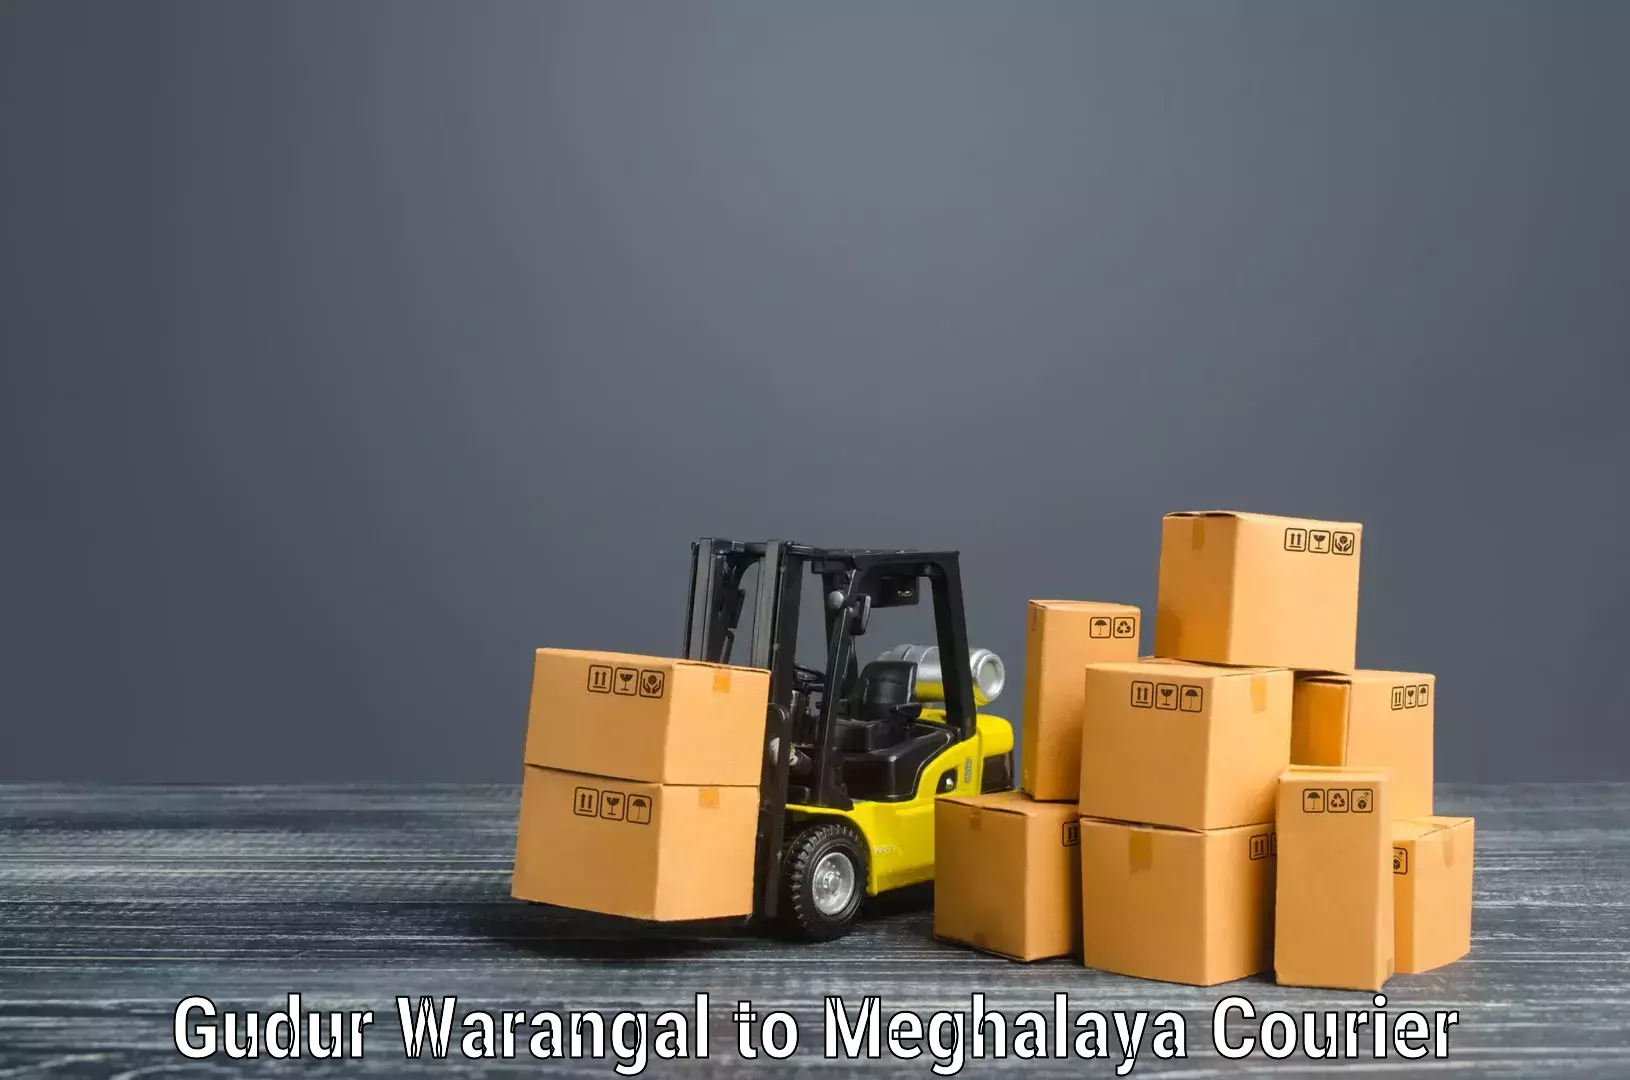 Furniture transport company Gudur Warangal to Meghalaya